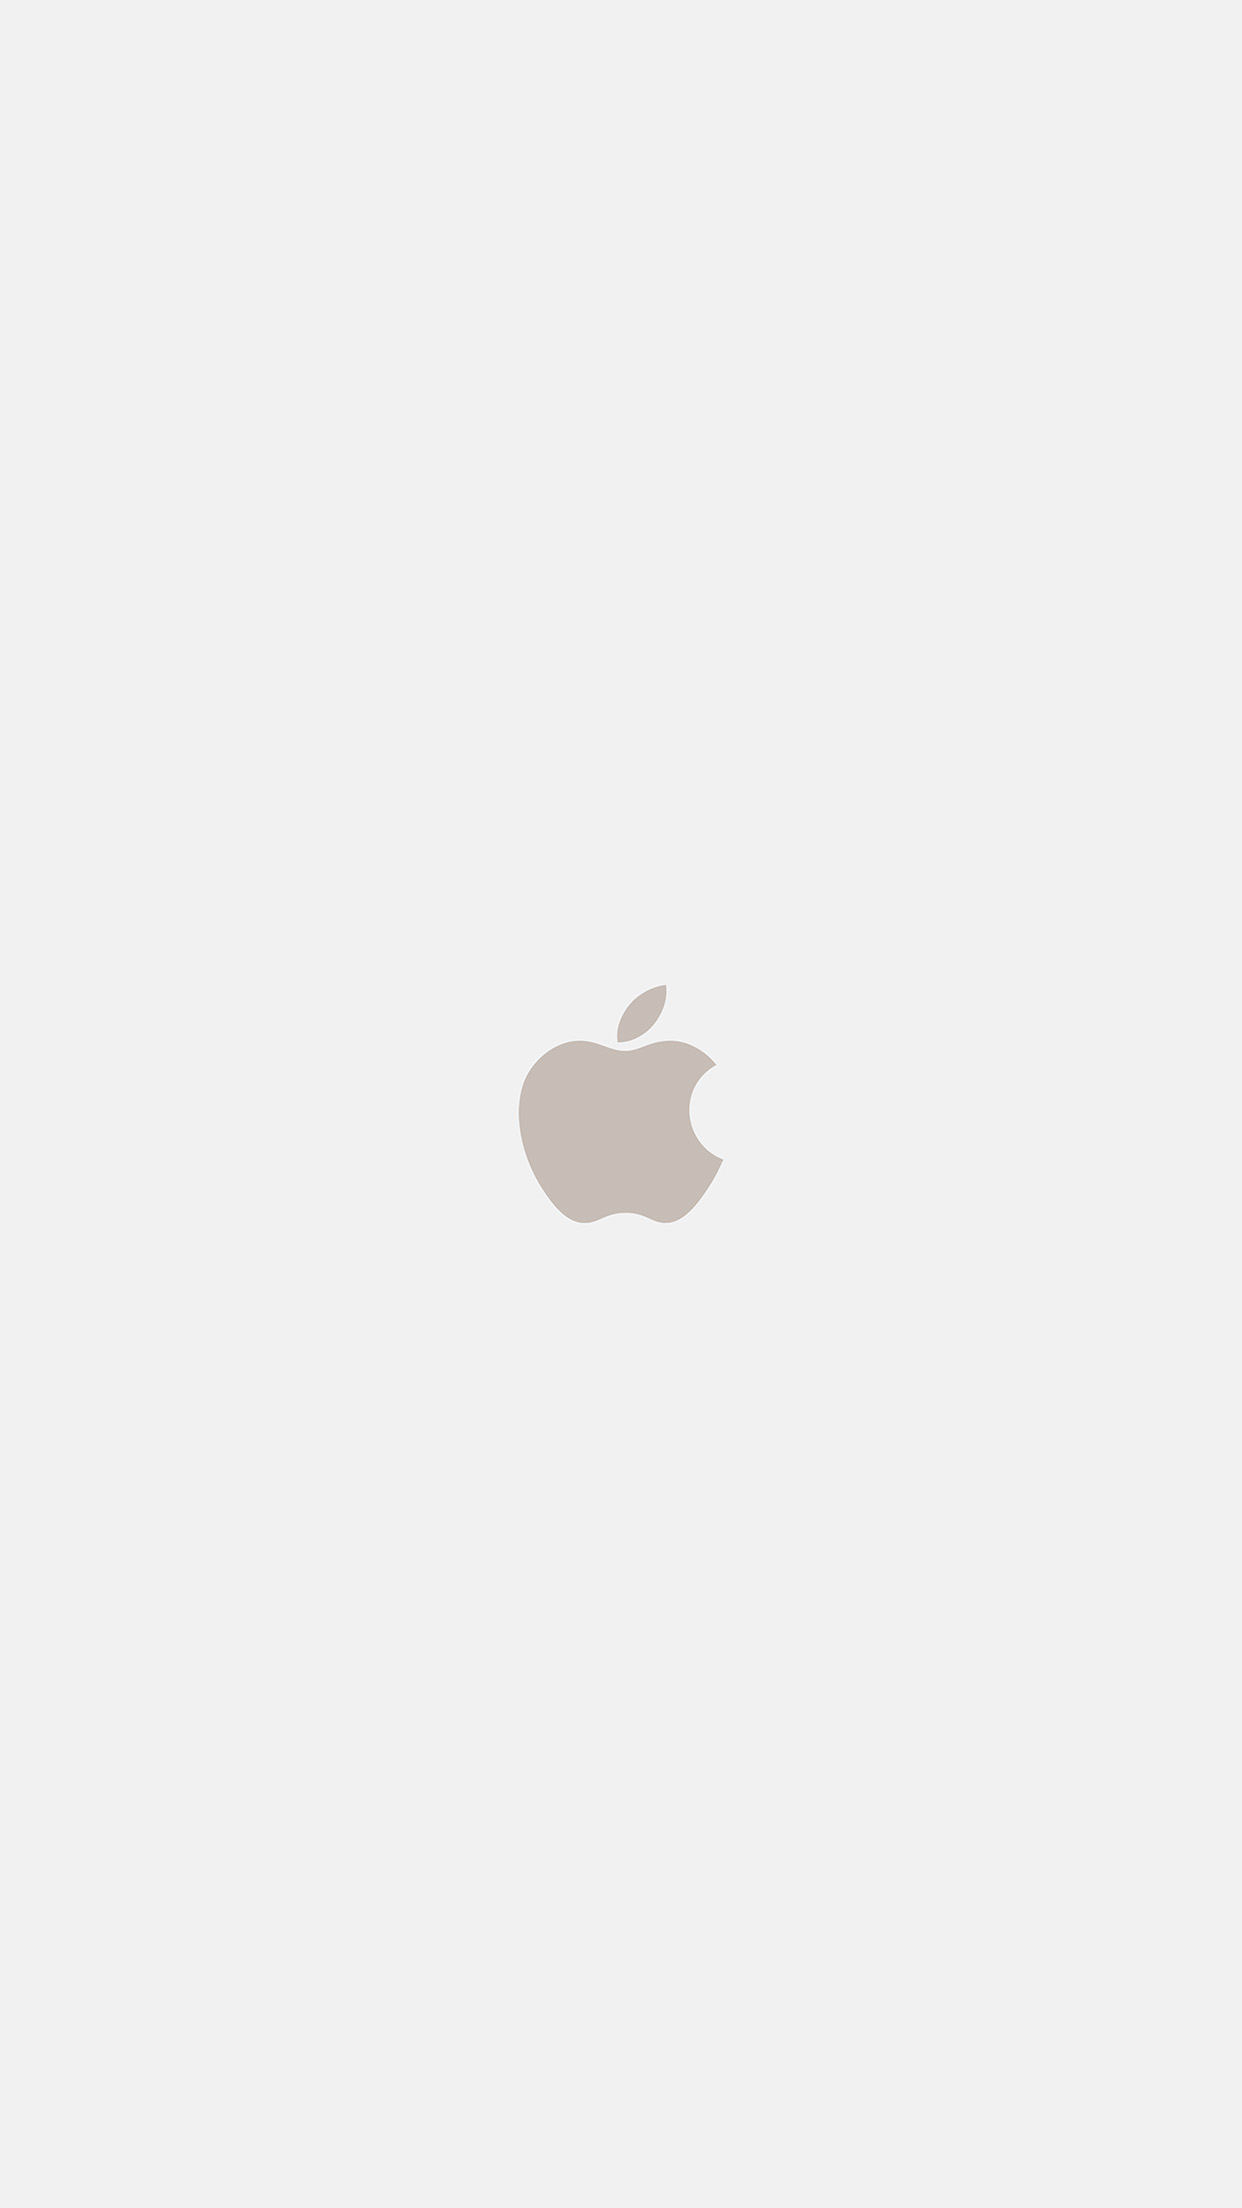 Iphone7 Apple Logo White Gold Art Illustration Android wallpaper